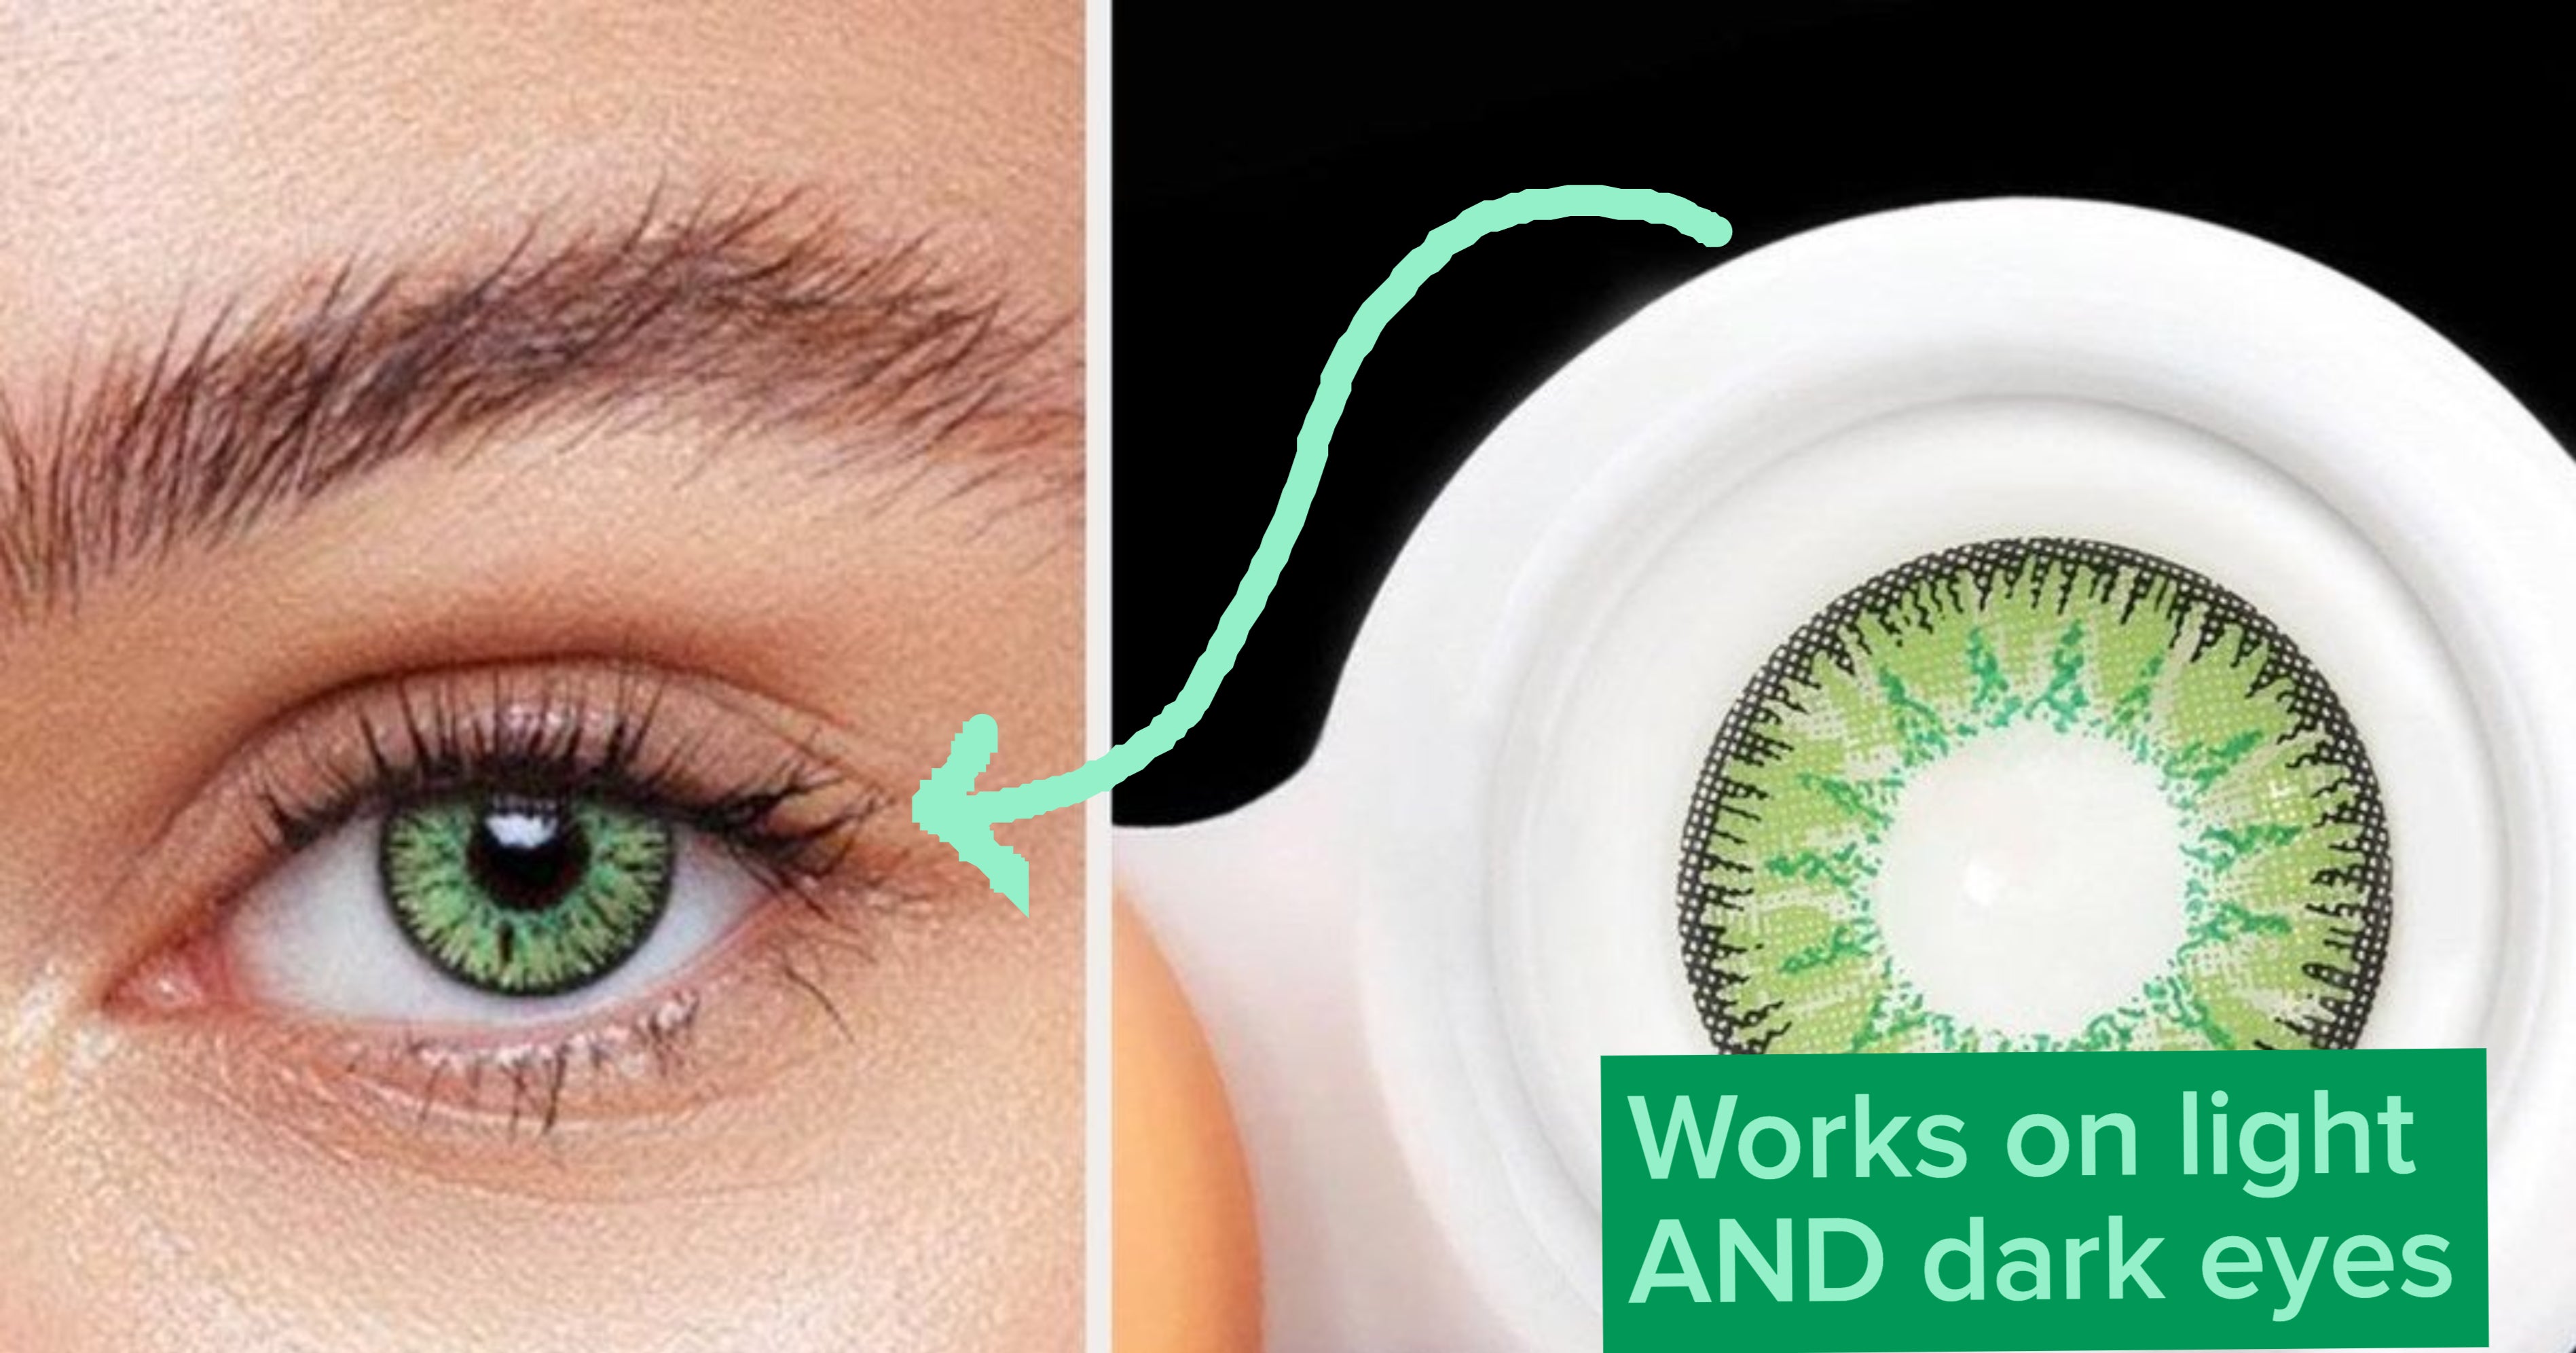 Cosplay Look Enhancement: Contact Lenses, Eye Makeup Tips & Best Practices  – HoneyColor